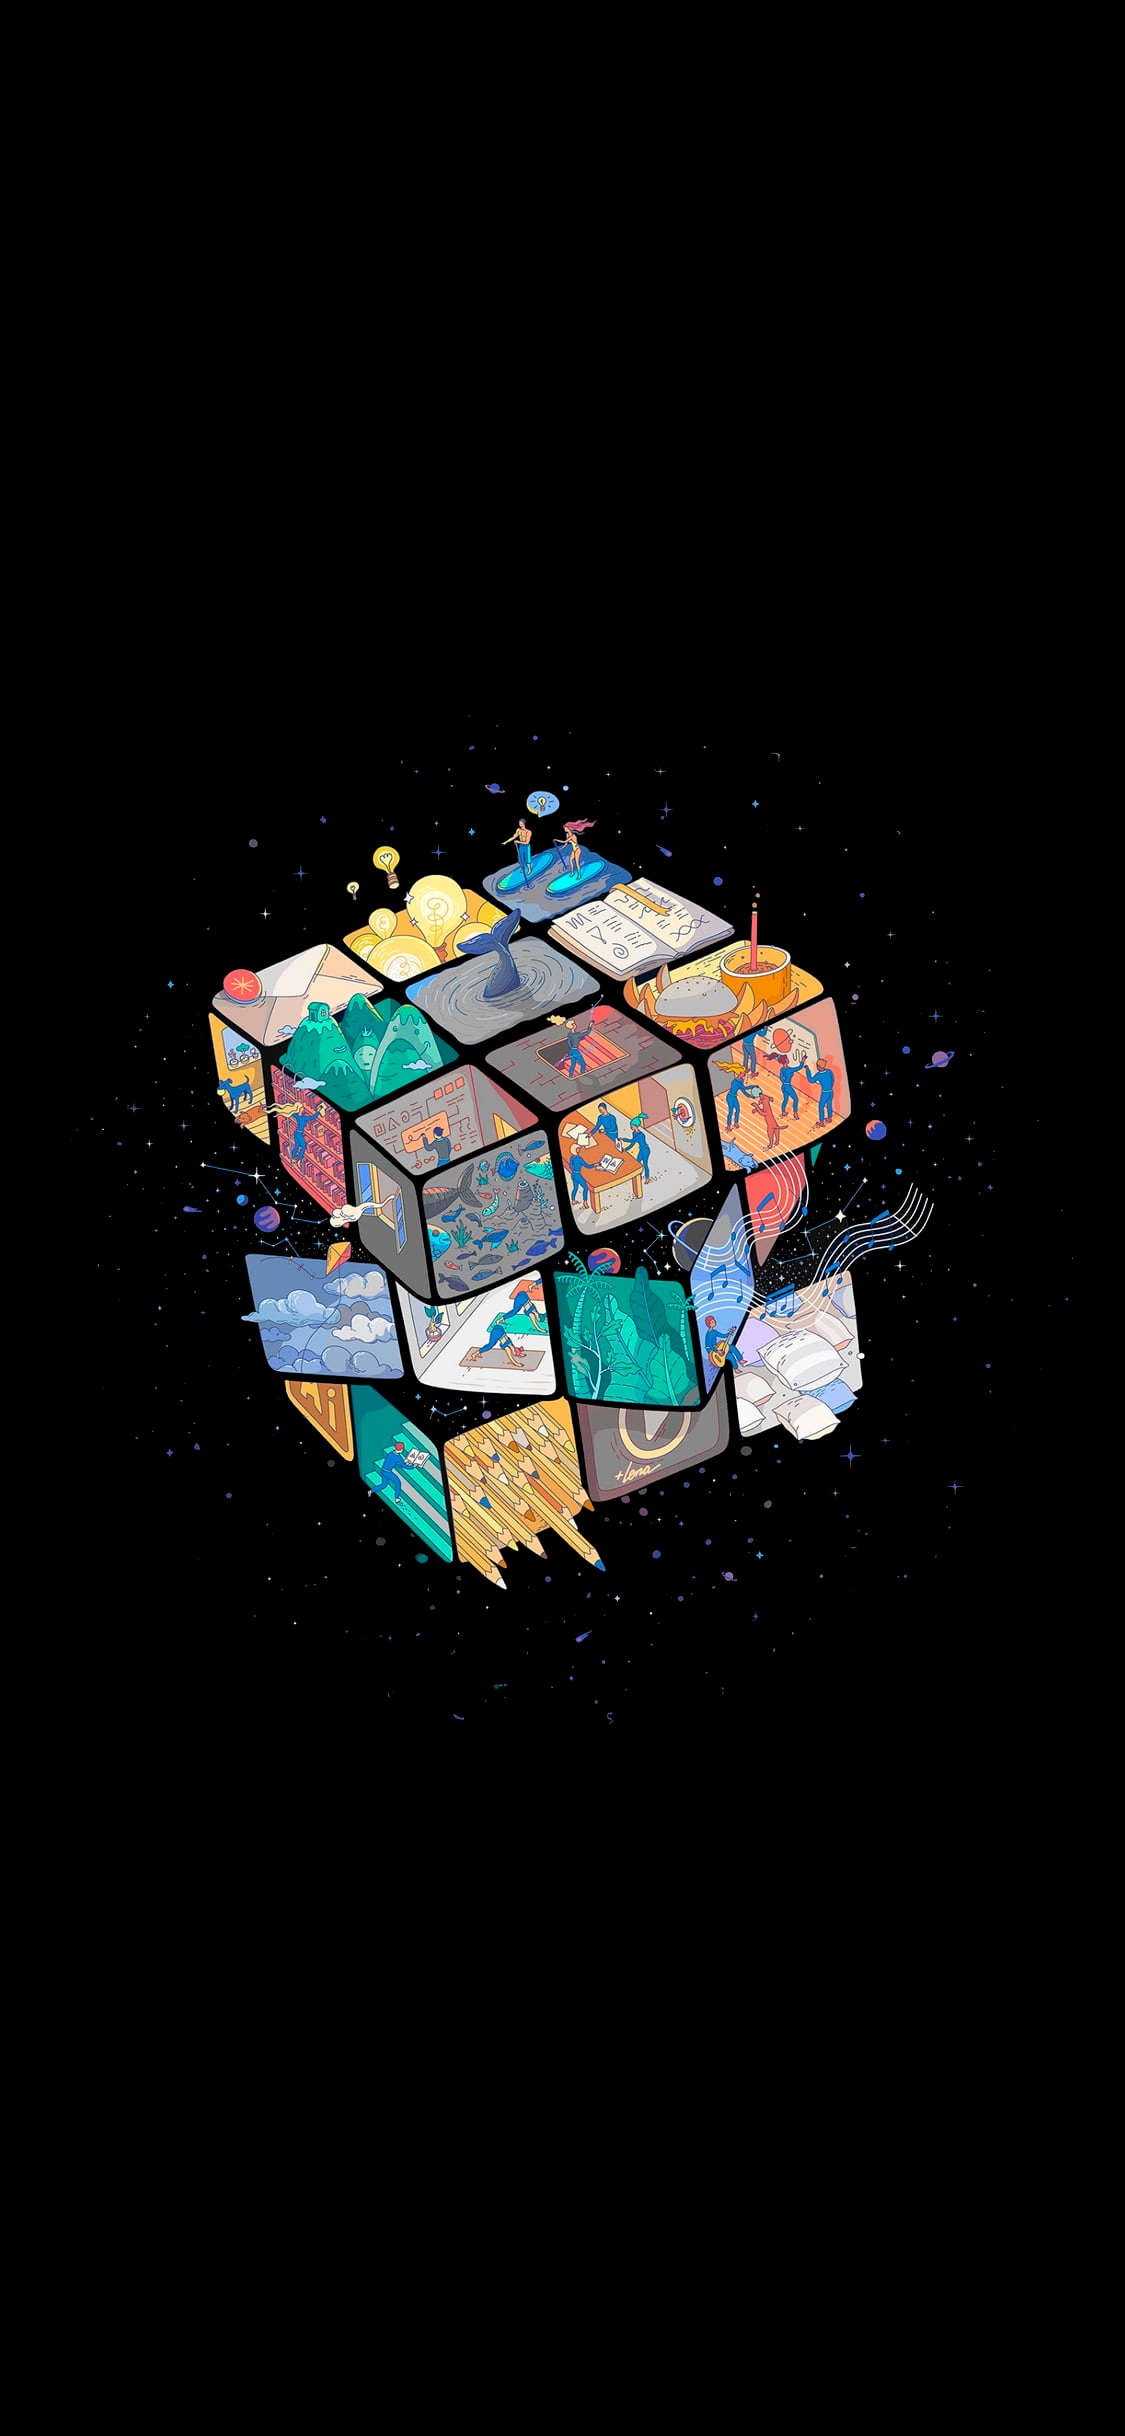 Amoled, dark, Rubik's Cube wallpaper